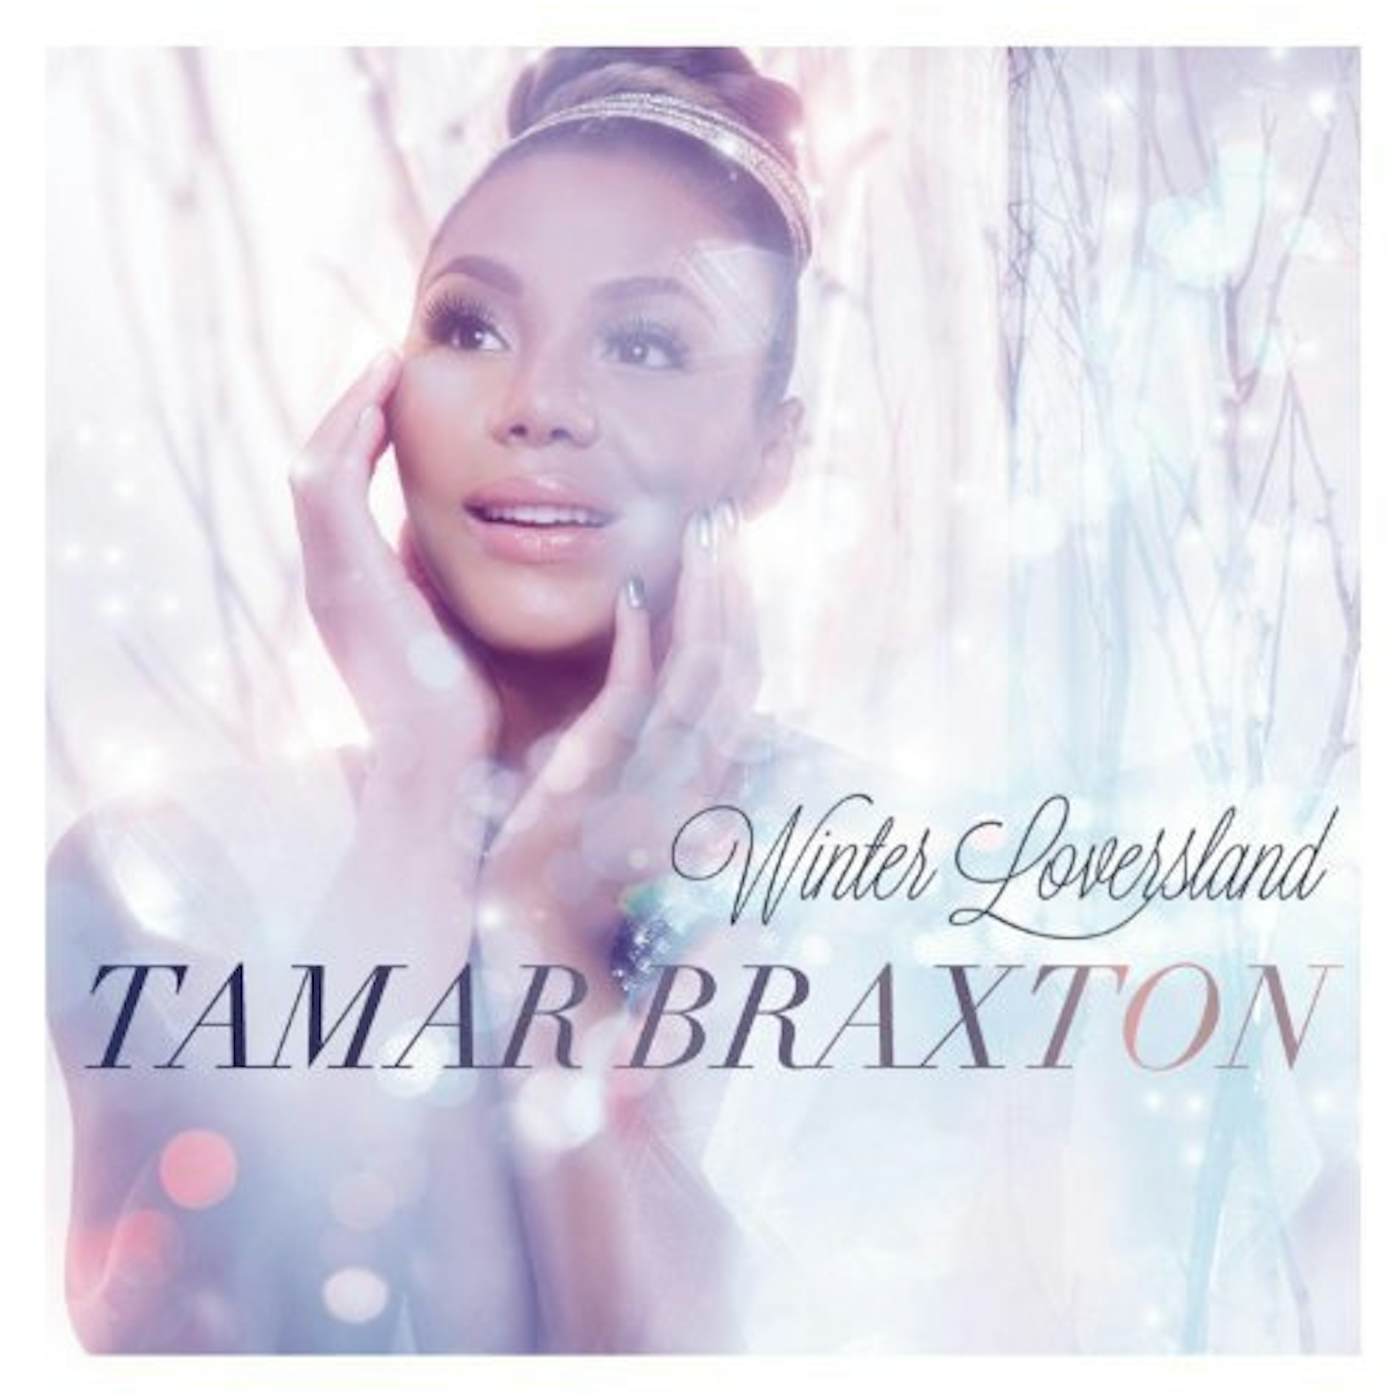 Tamar Braxton WINTER LOVERSLAND CD